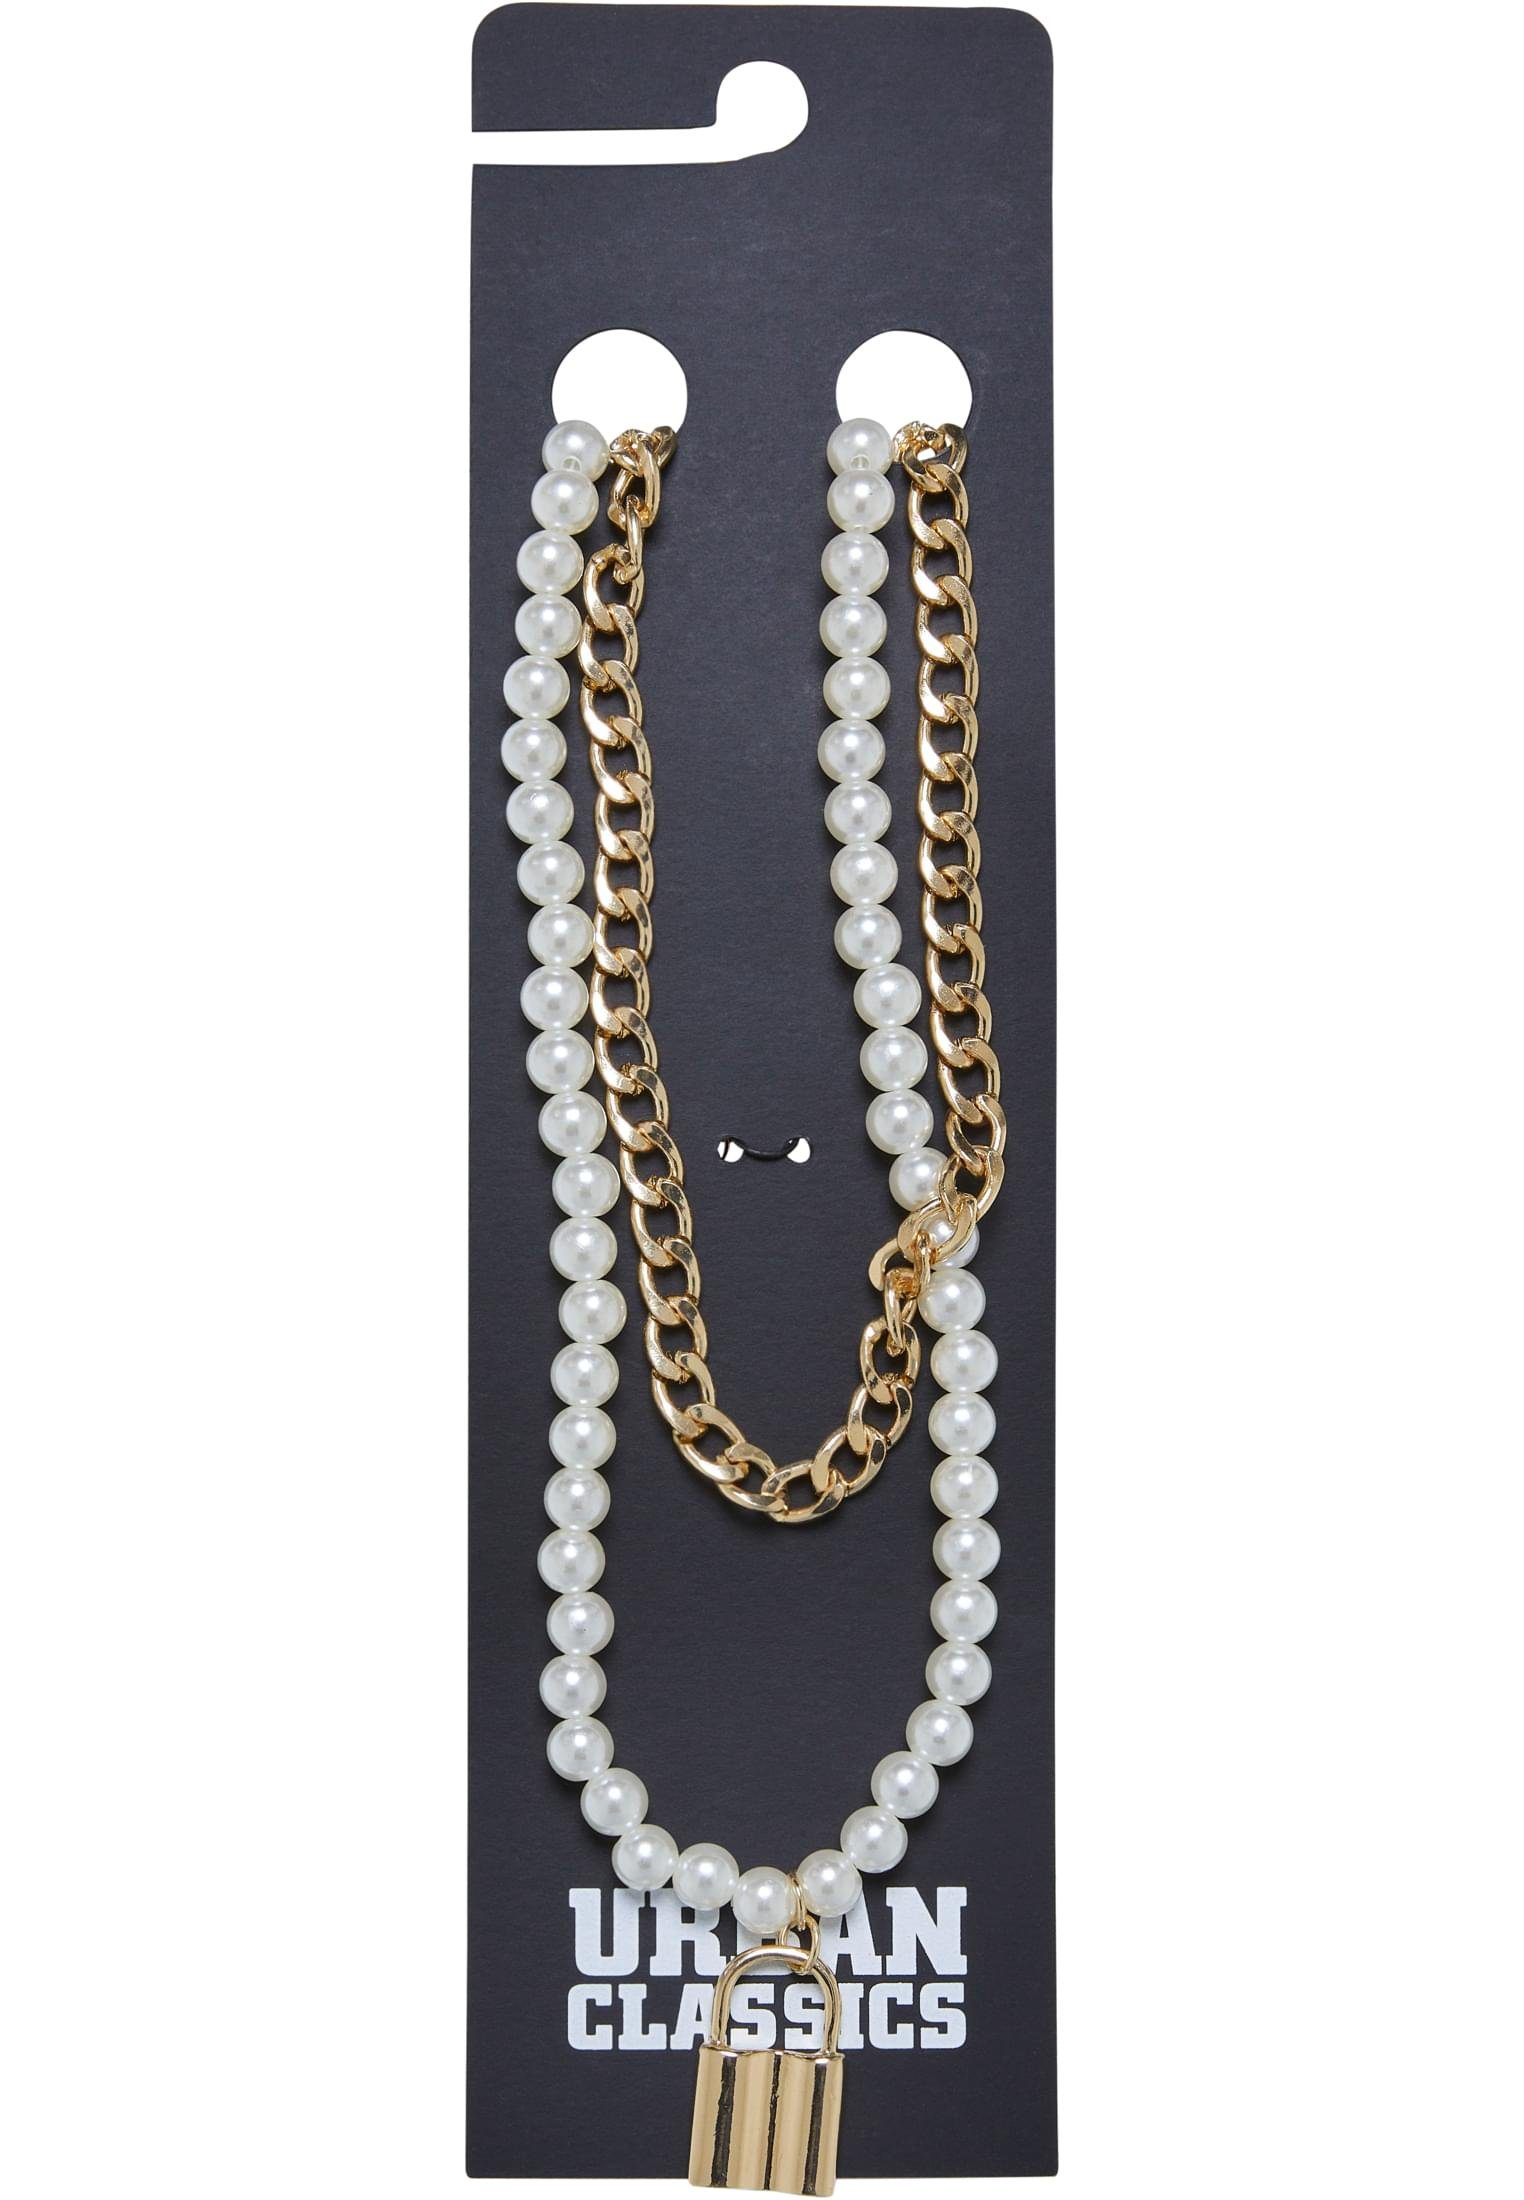 Padlock Necklace Edelstahlkette URBAN CLASSICS Pearl Accessoires Layering